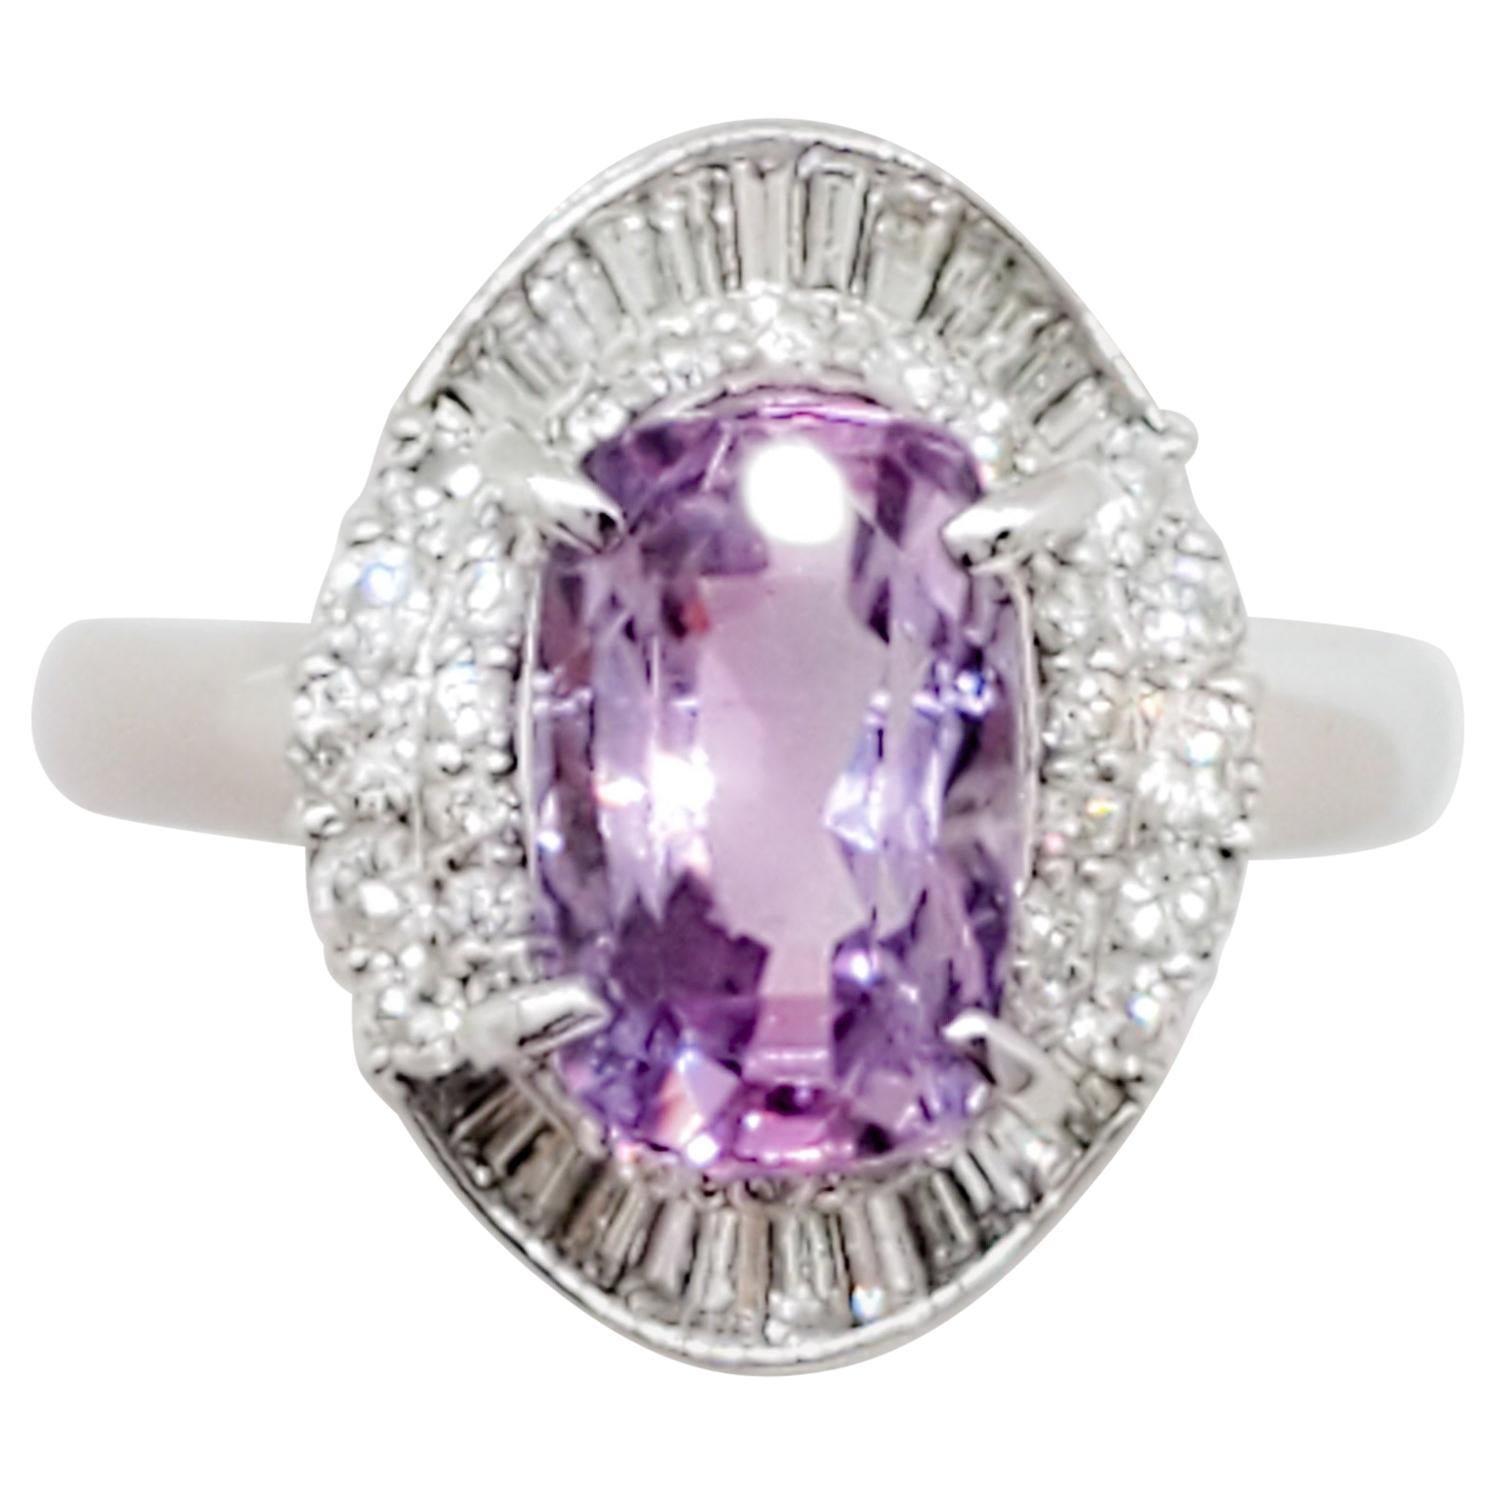 4 Carat Oval Pinkish Purple Sapphire Diamond Gold Cocktail Ring with ...